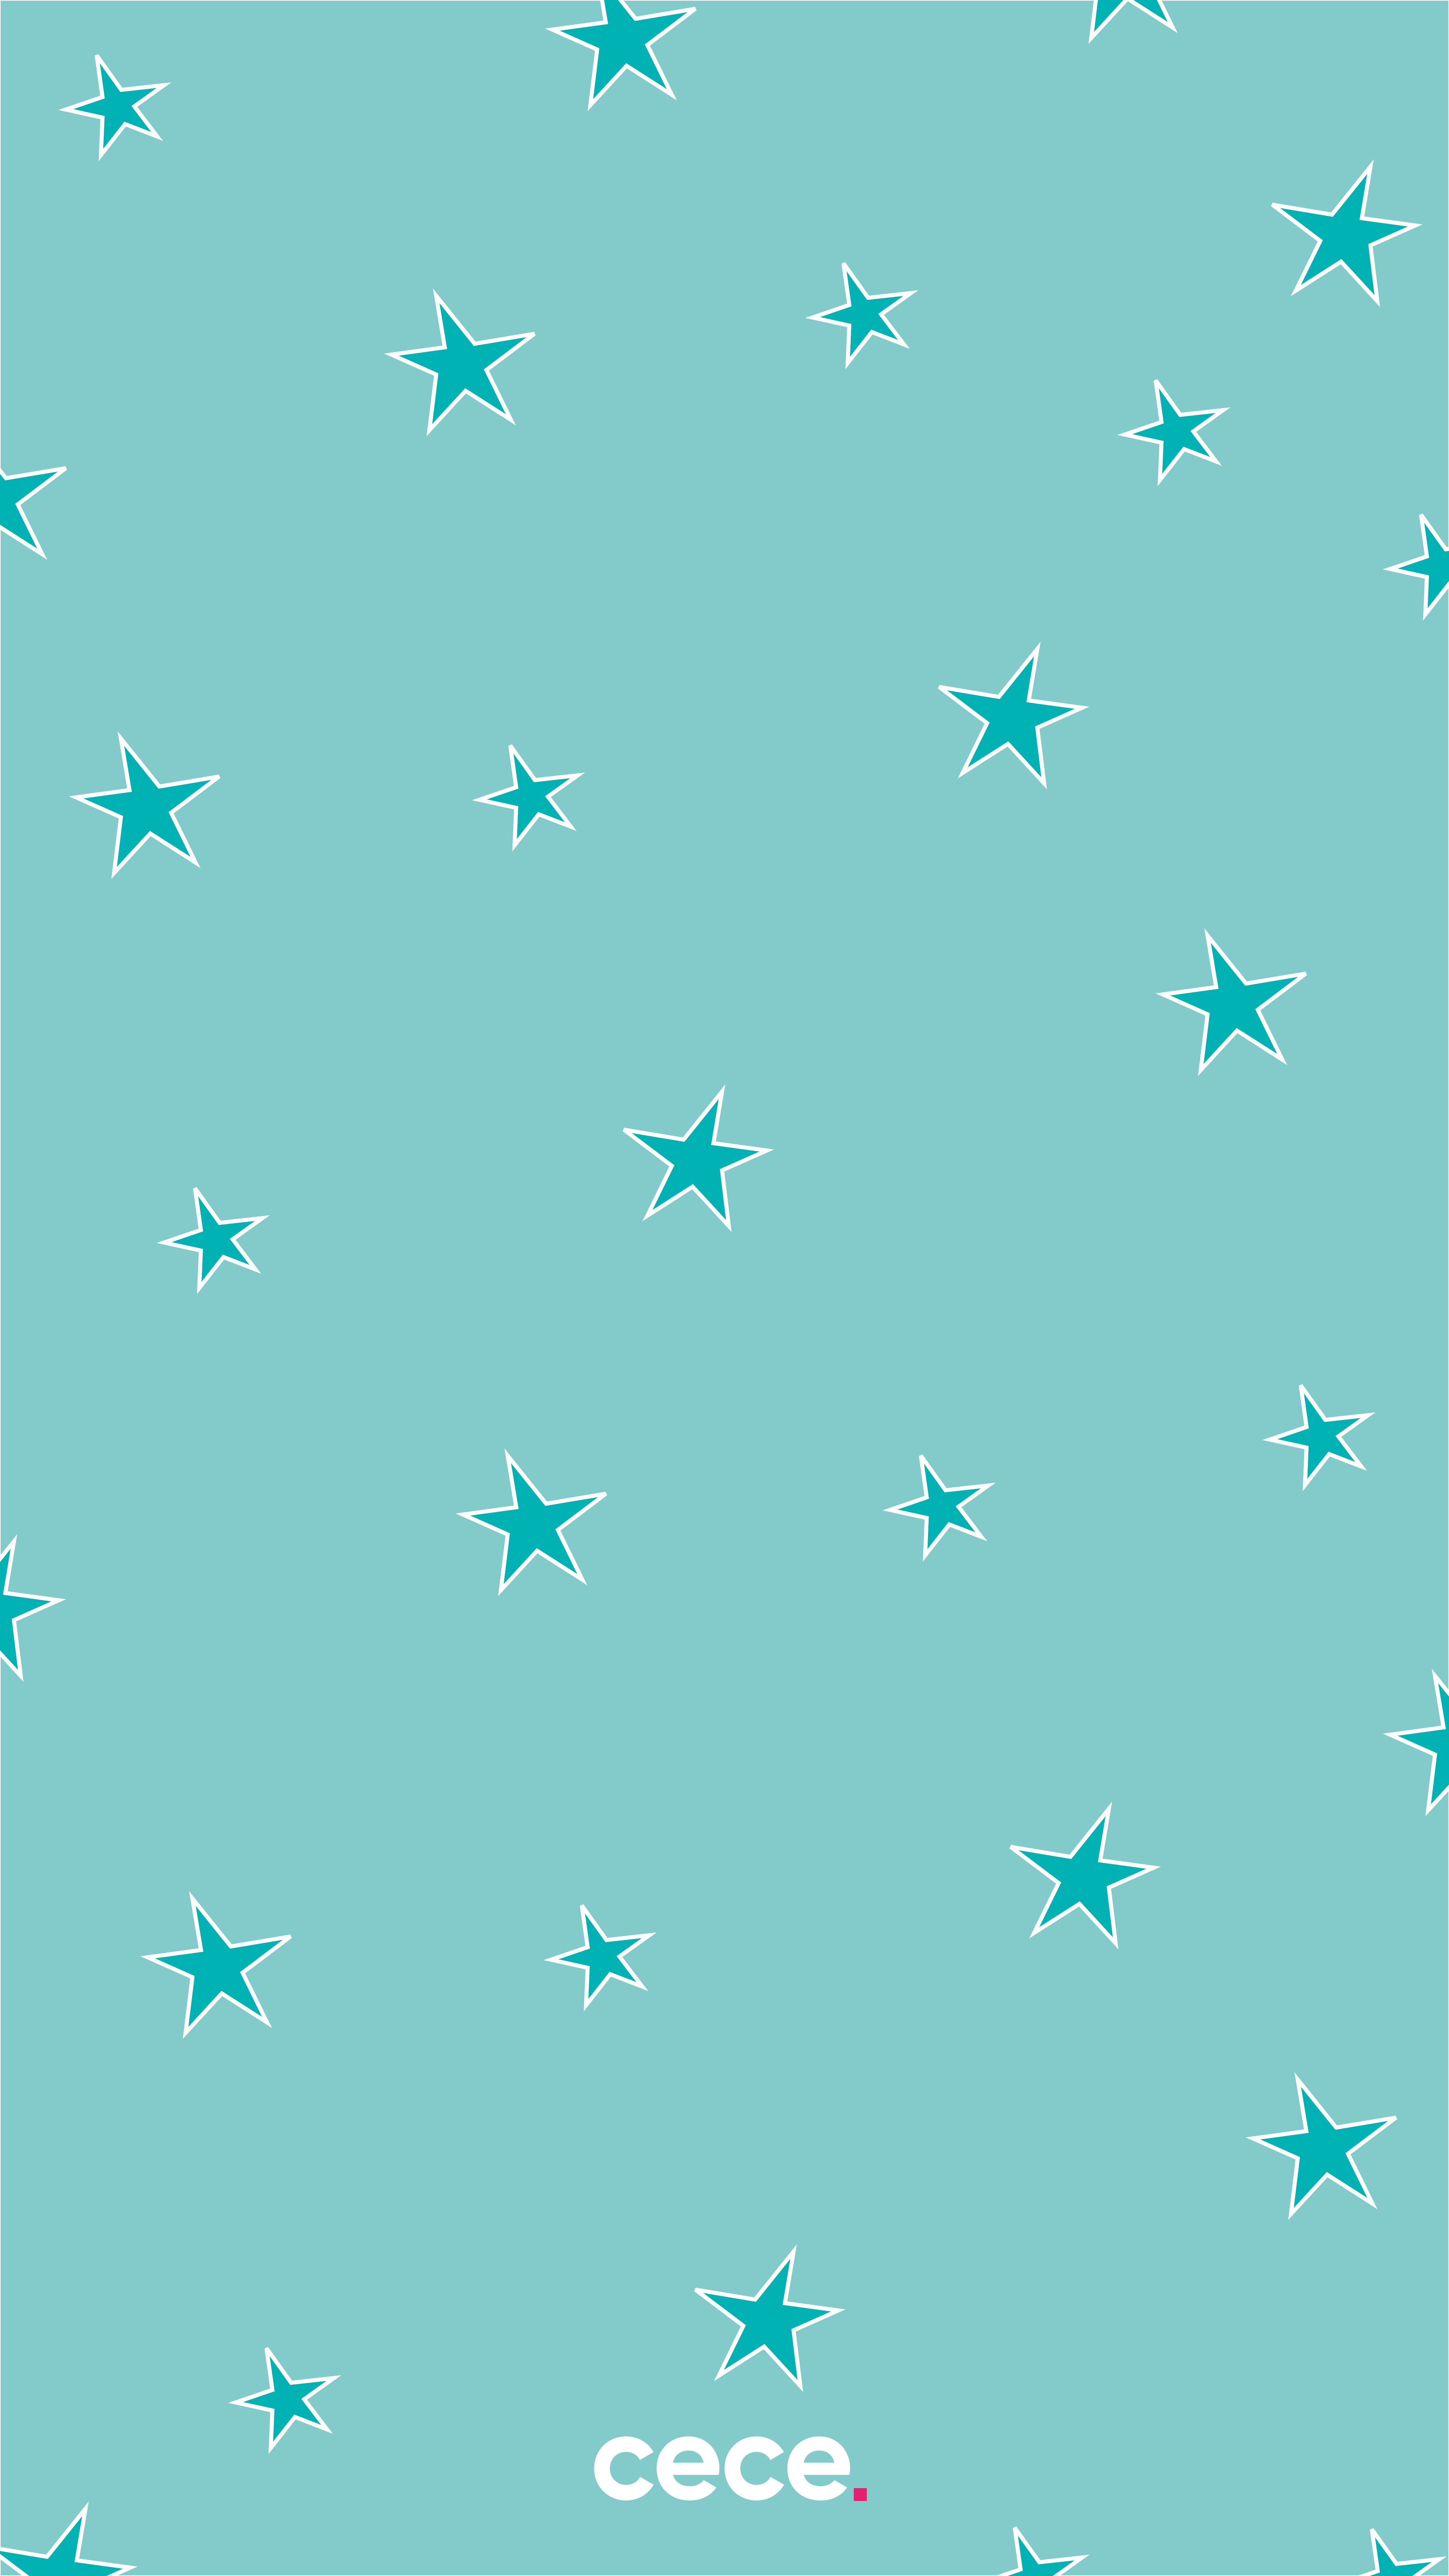 Cute Stars Wallpapers